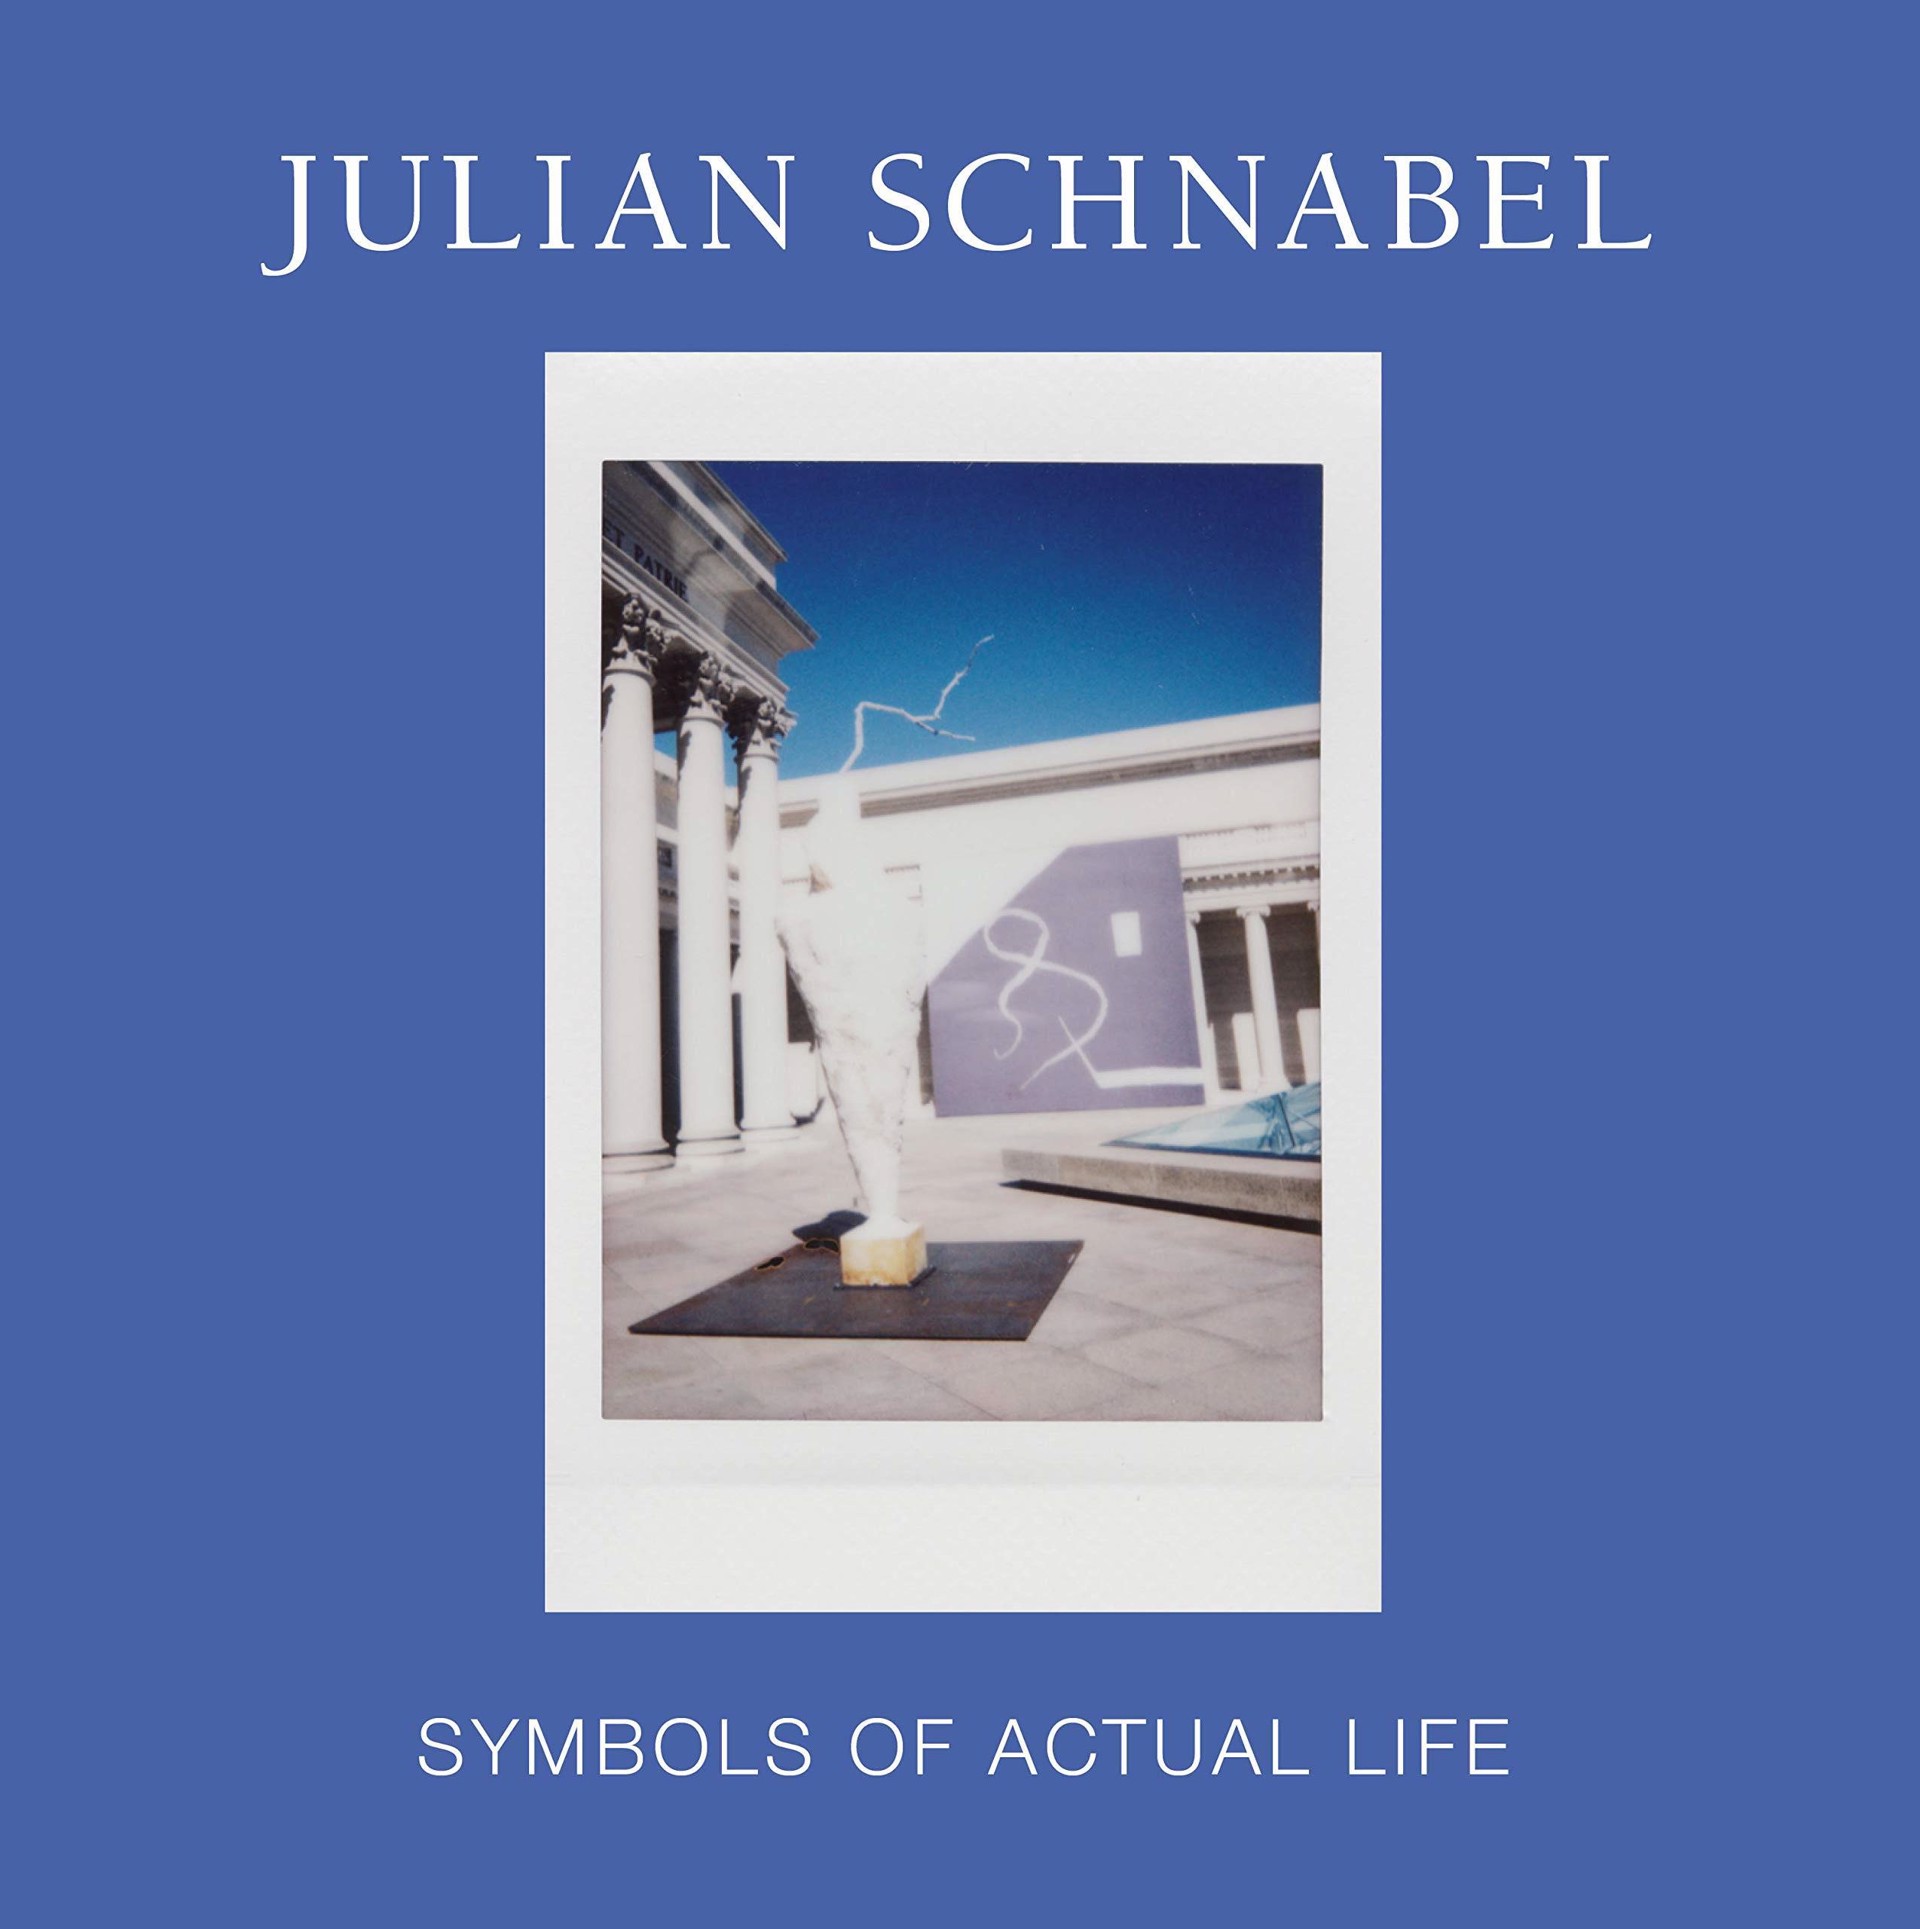 Julian Schnabel: Symbols of Actual Life by Julian Schnabel